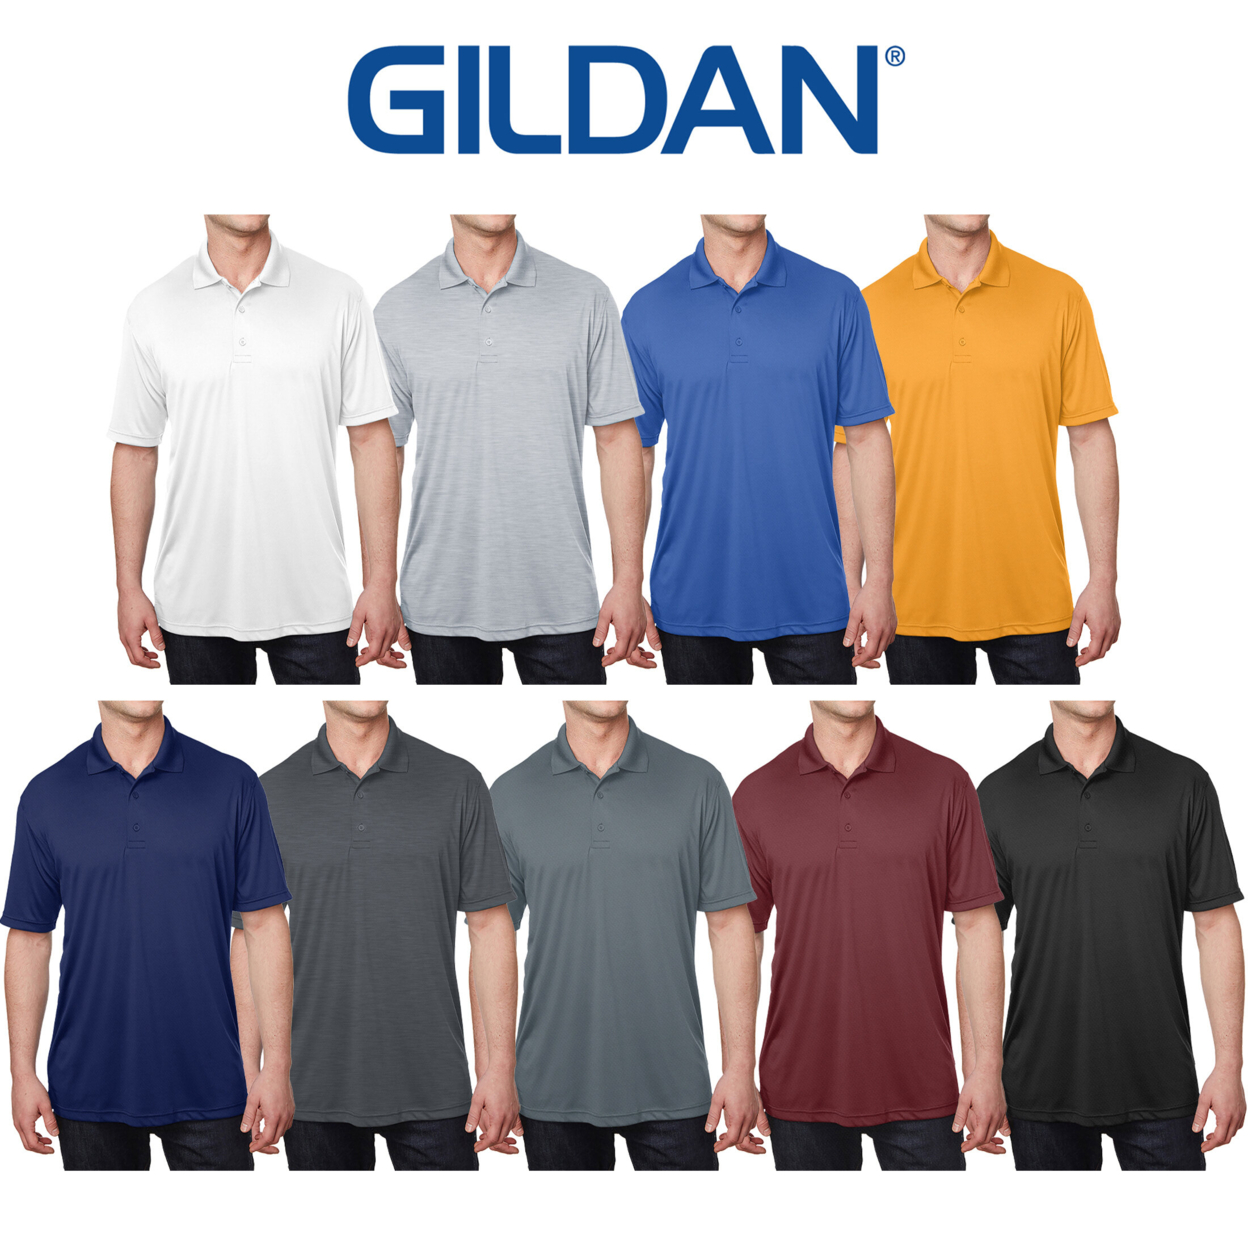 3-Pack Men's Gildan Active Moisture Wicking Dry Fit Polo Shirts - Medium